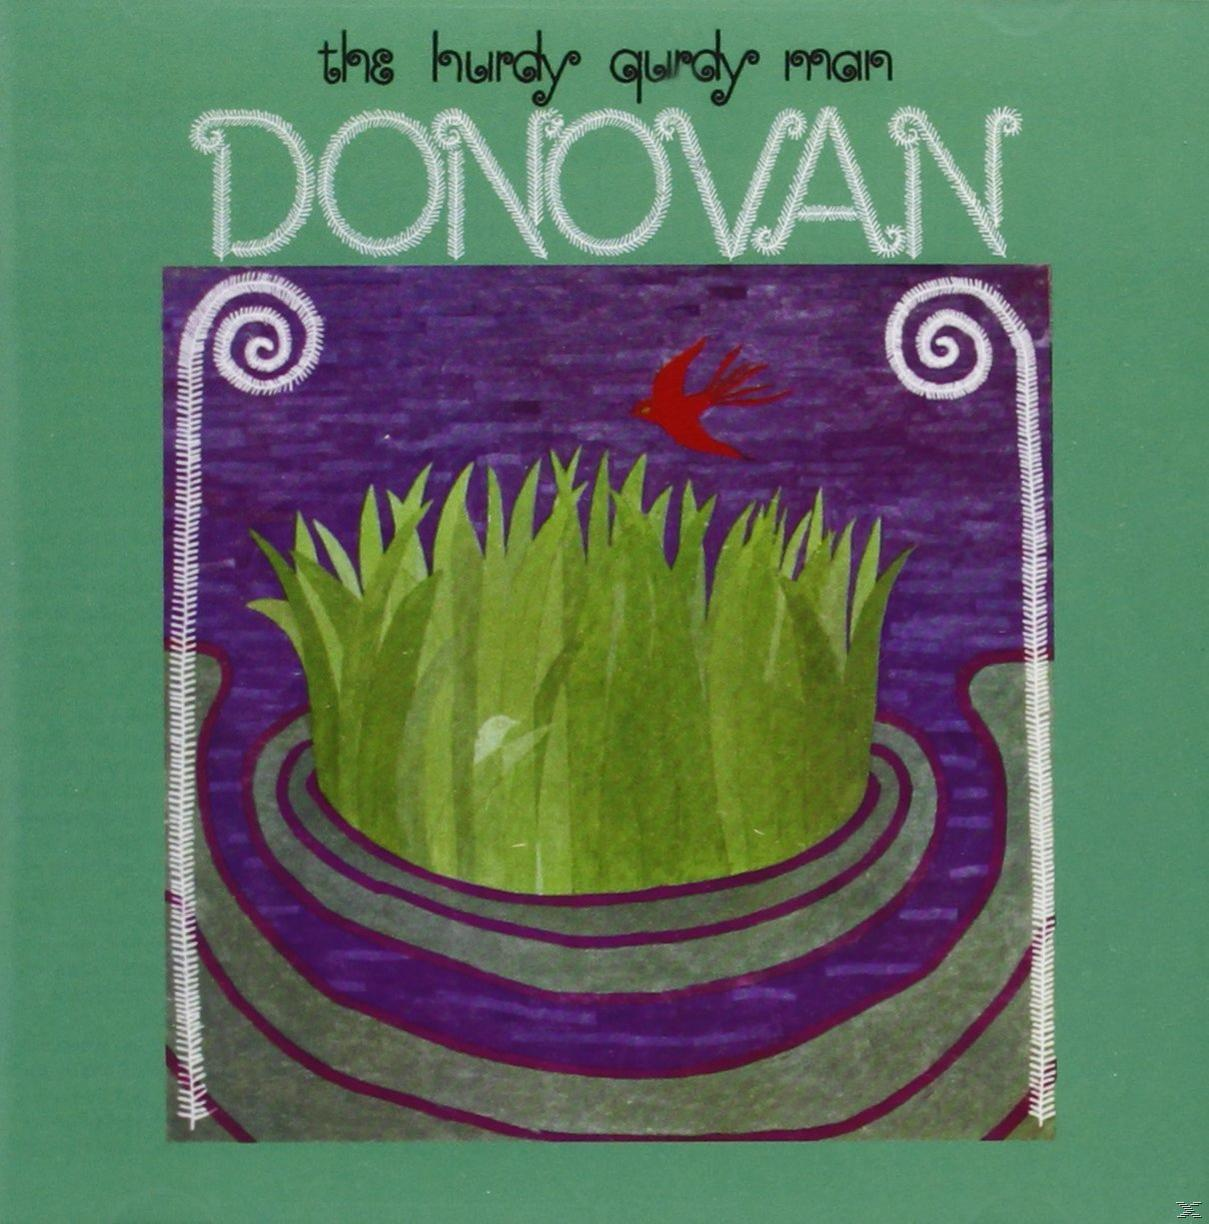 Donovan - The Hurdy Gurdy (Vinyl) - Man